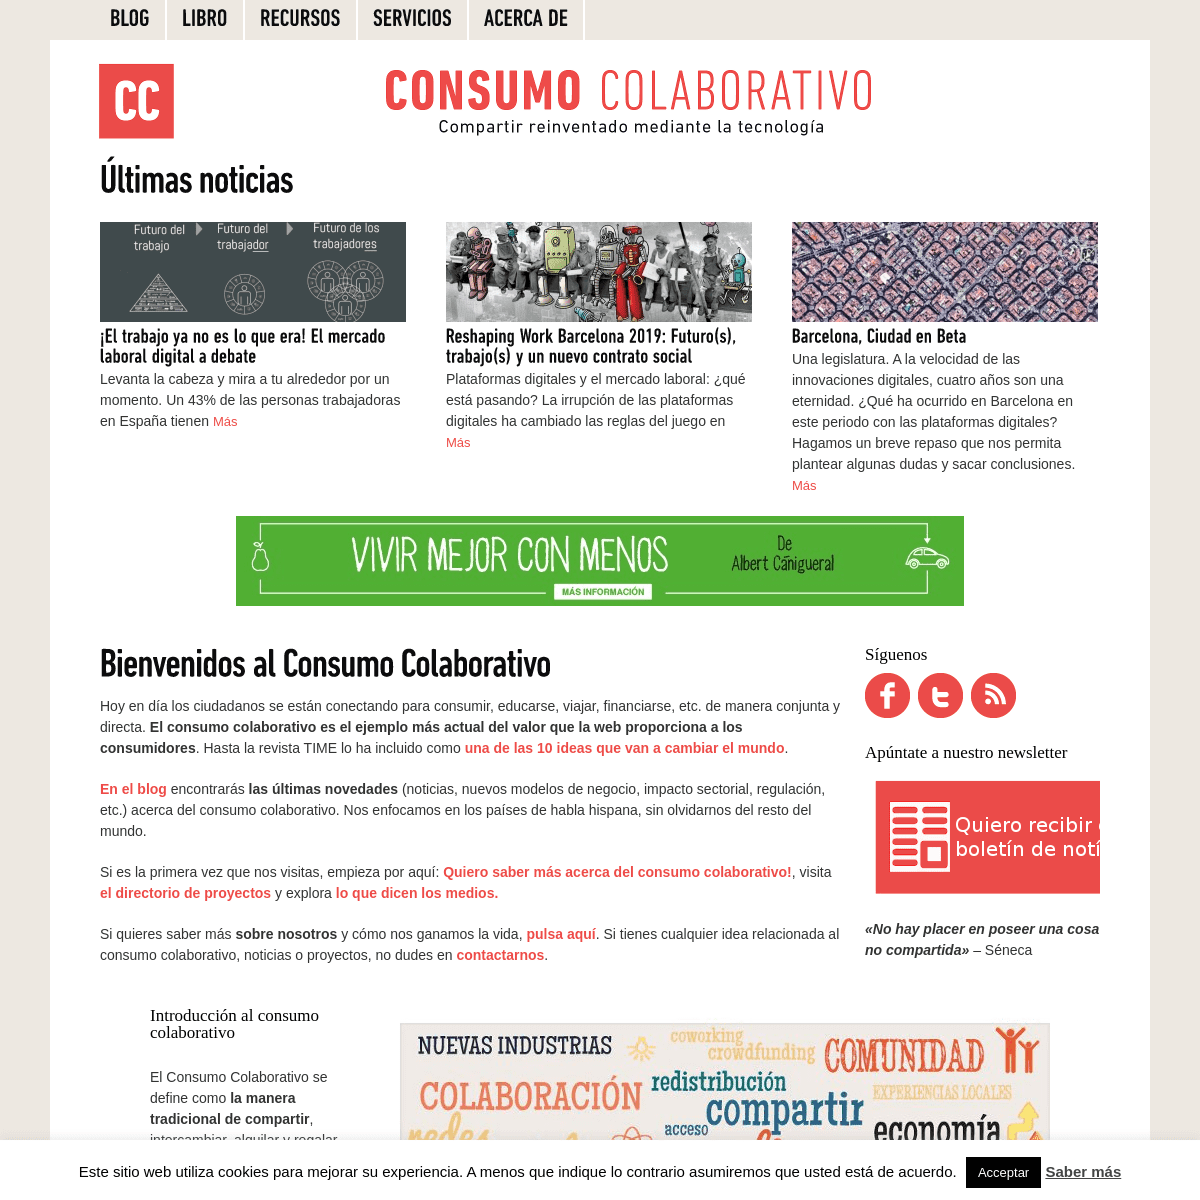 A complete backup of https://consumocolaborativo.com